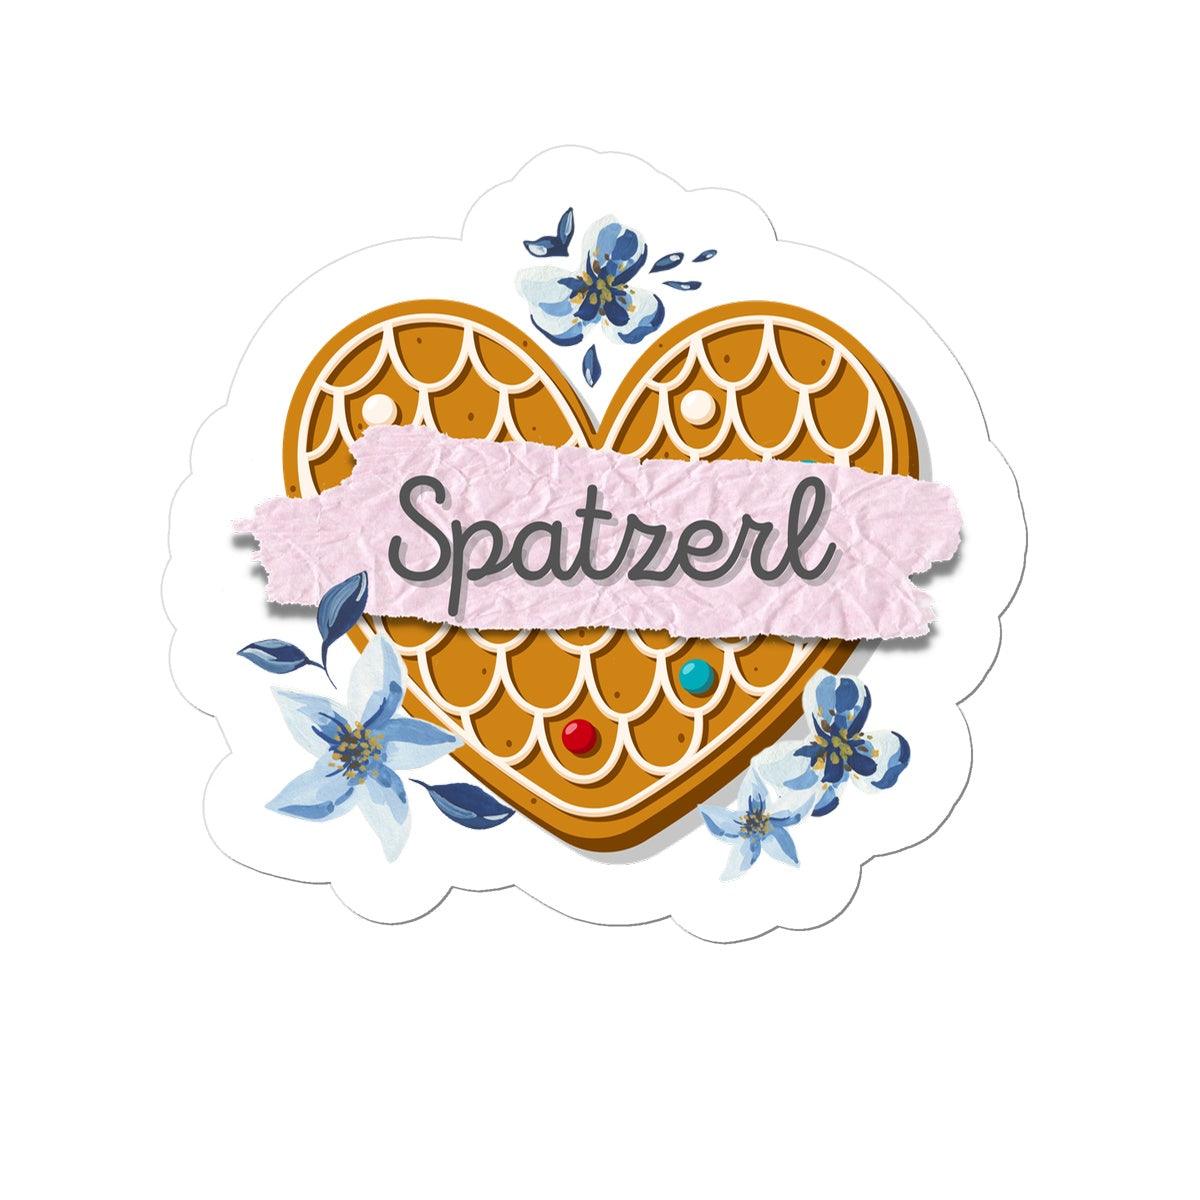 Bavarian Romantic Retro Sticker "Spatzerl", Gingerbread Heart & Floral Print, vinyl, 4 sizes - Bavari Shop - Bavarian Outfits, Dirndl, Lederhosen & Accessories